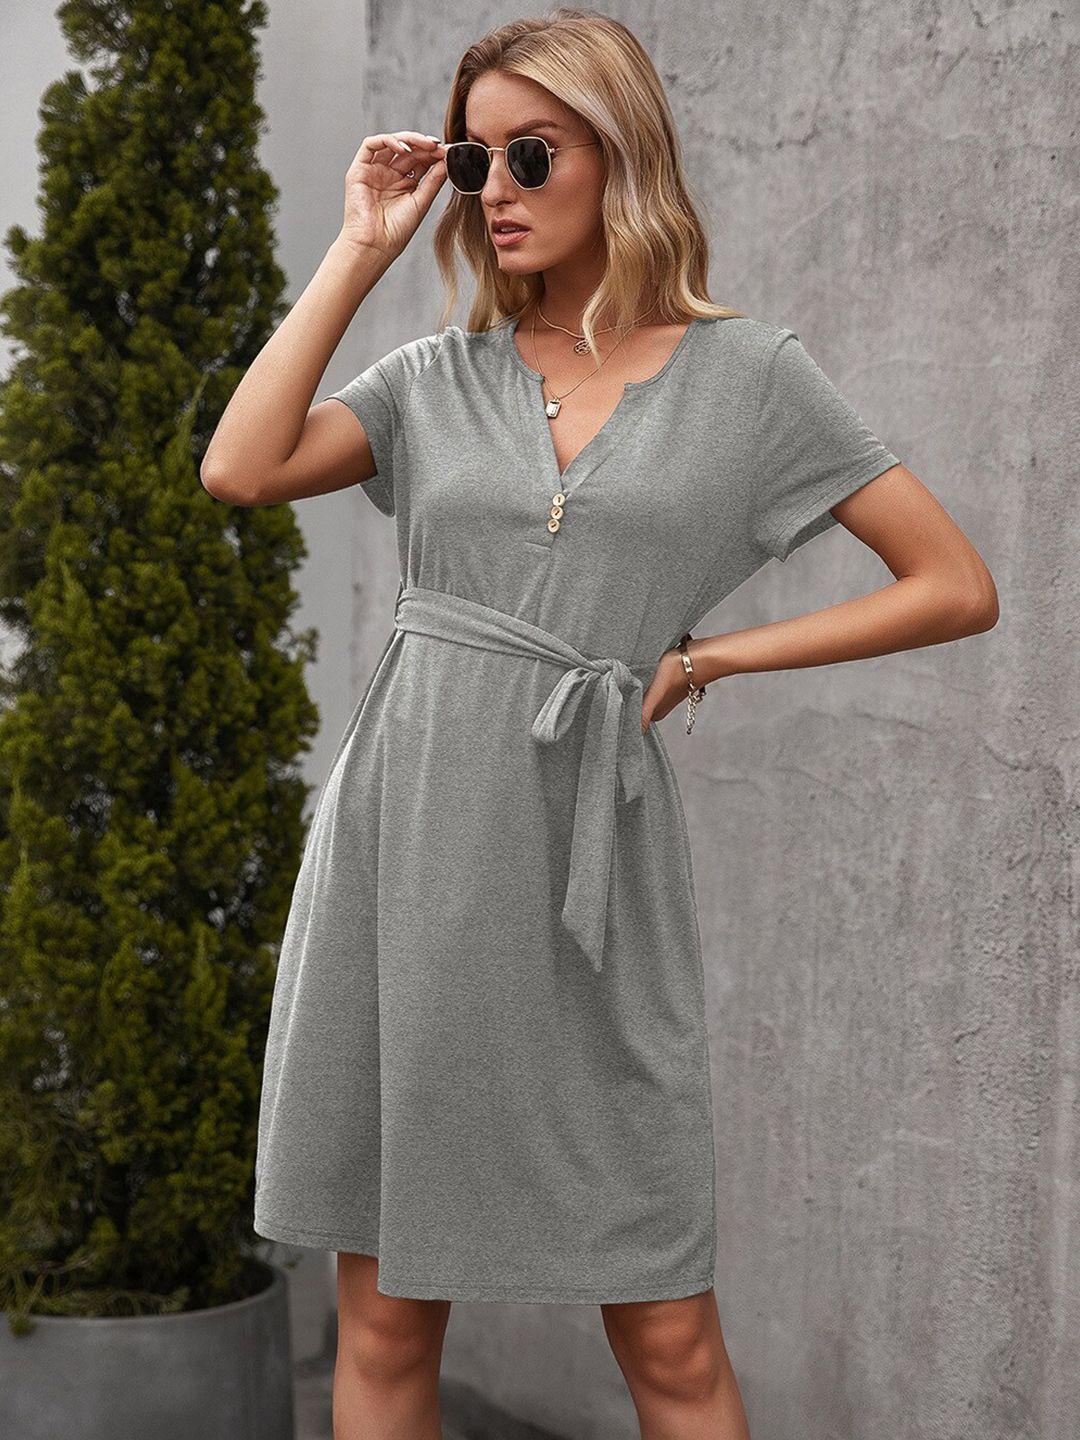 bostreet grey a-line dress